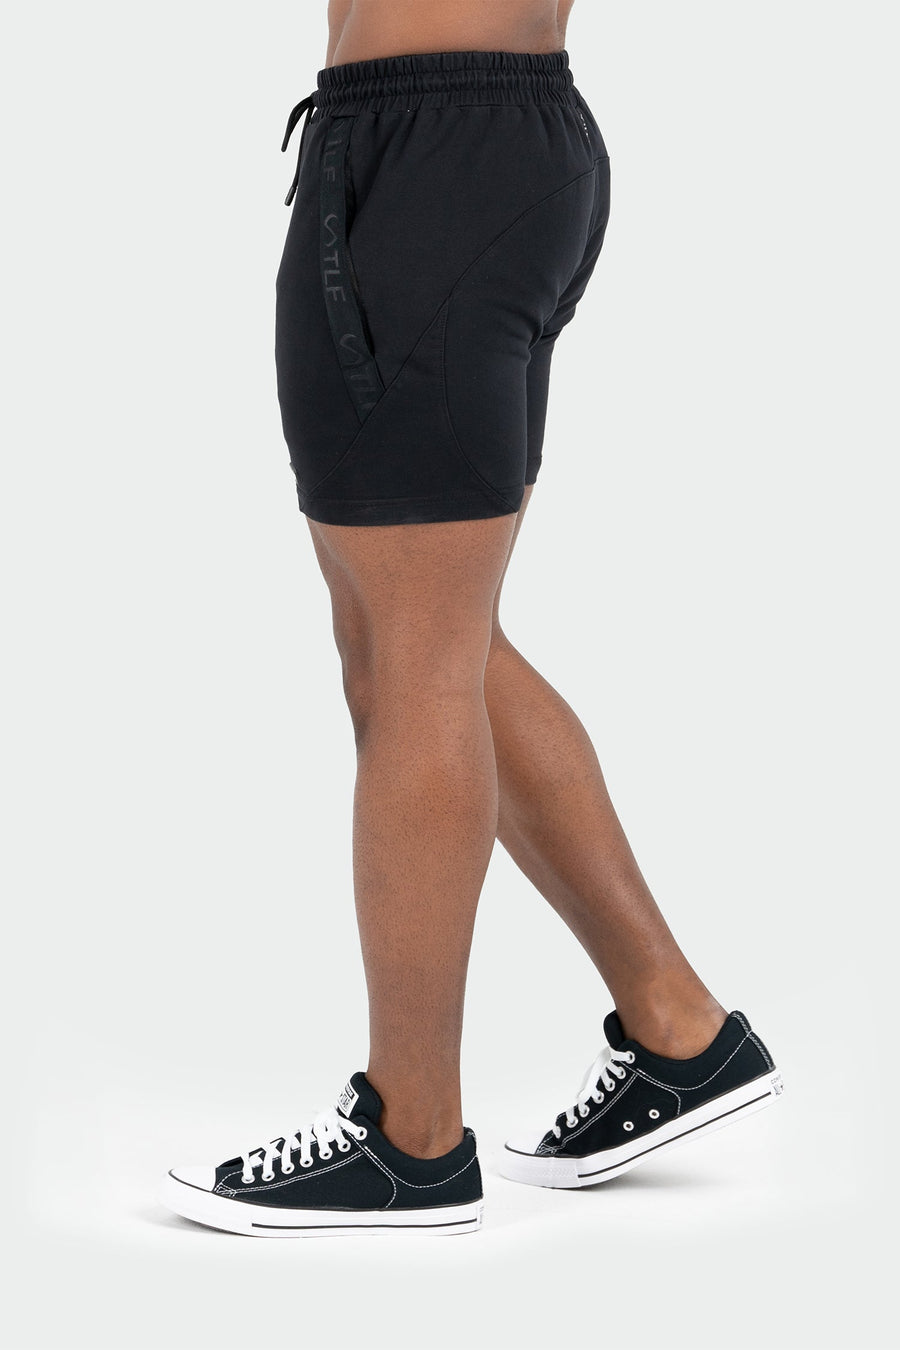 TLF Vital 5” Shorts - Men’s 5 Inch inseam Shorts - Black - 3